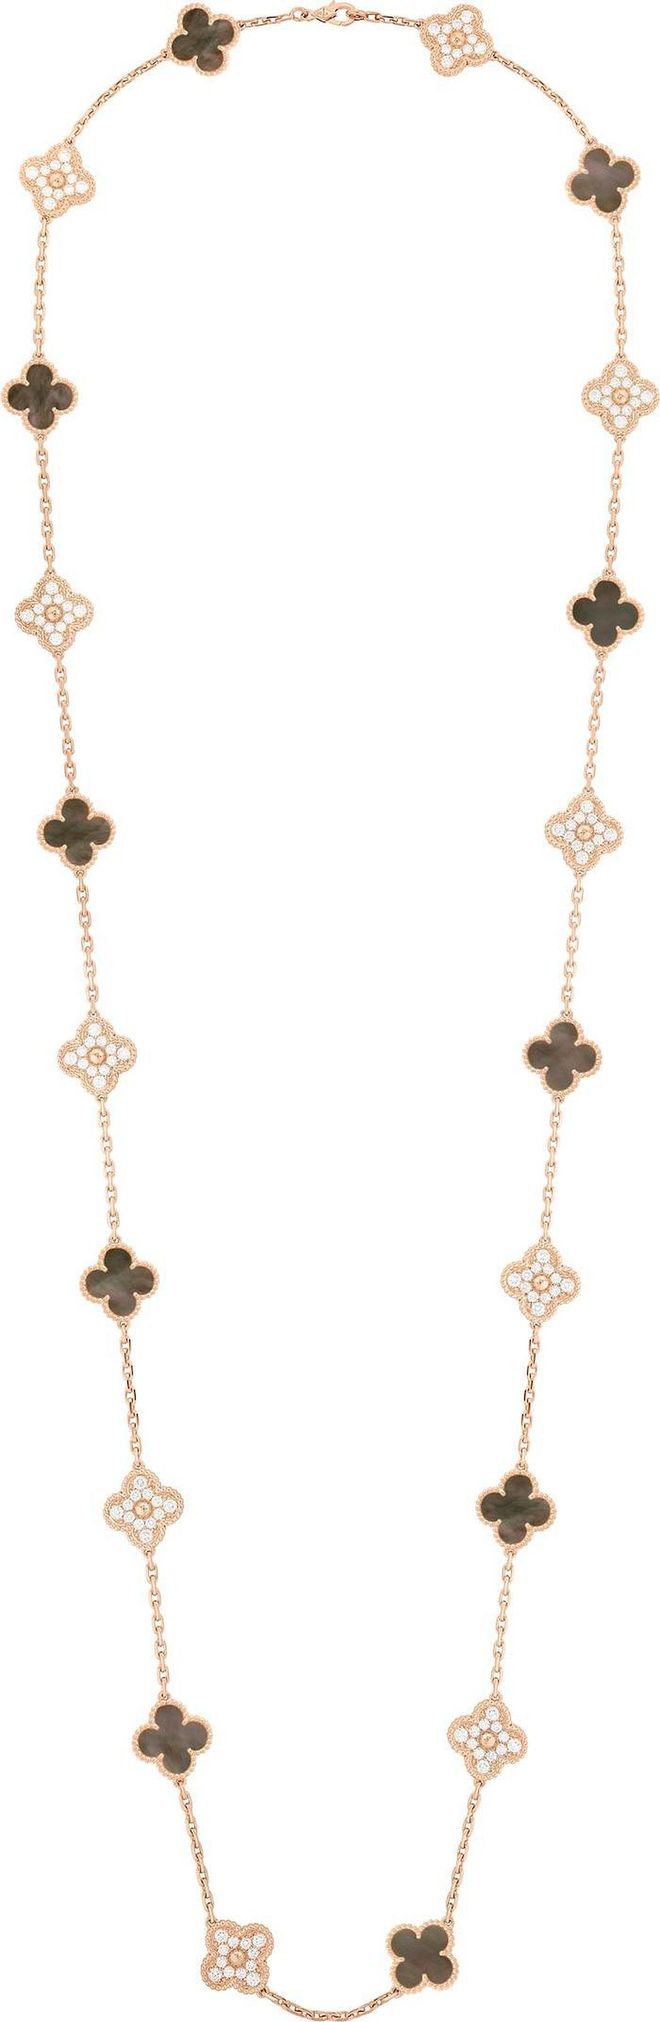 Vintage Alhambra long necklace, 20 motifs, rose gold, gray mother-of-pearl,. (Photo: Van Cleef & Arpels)